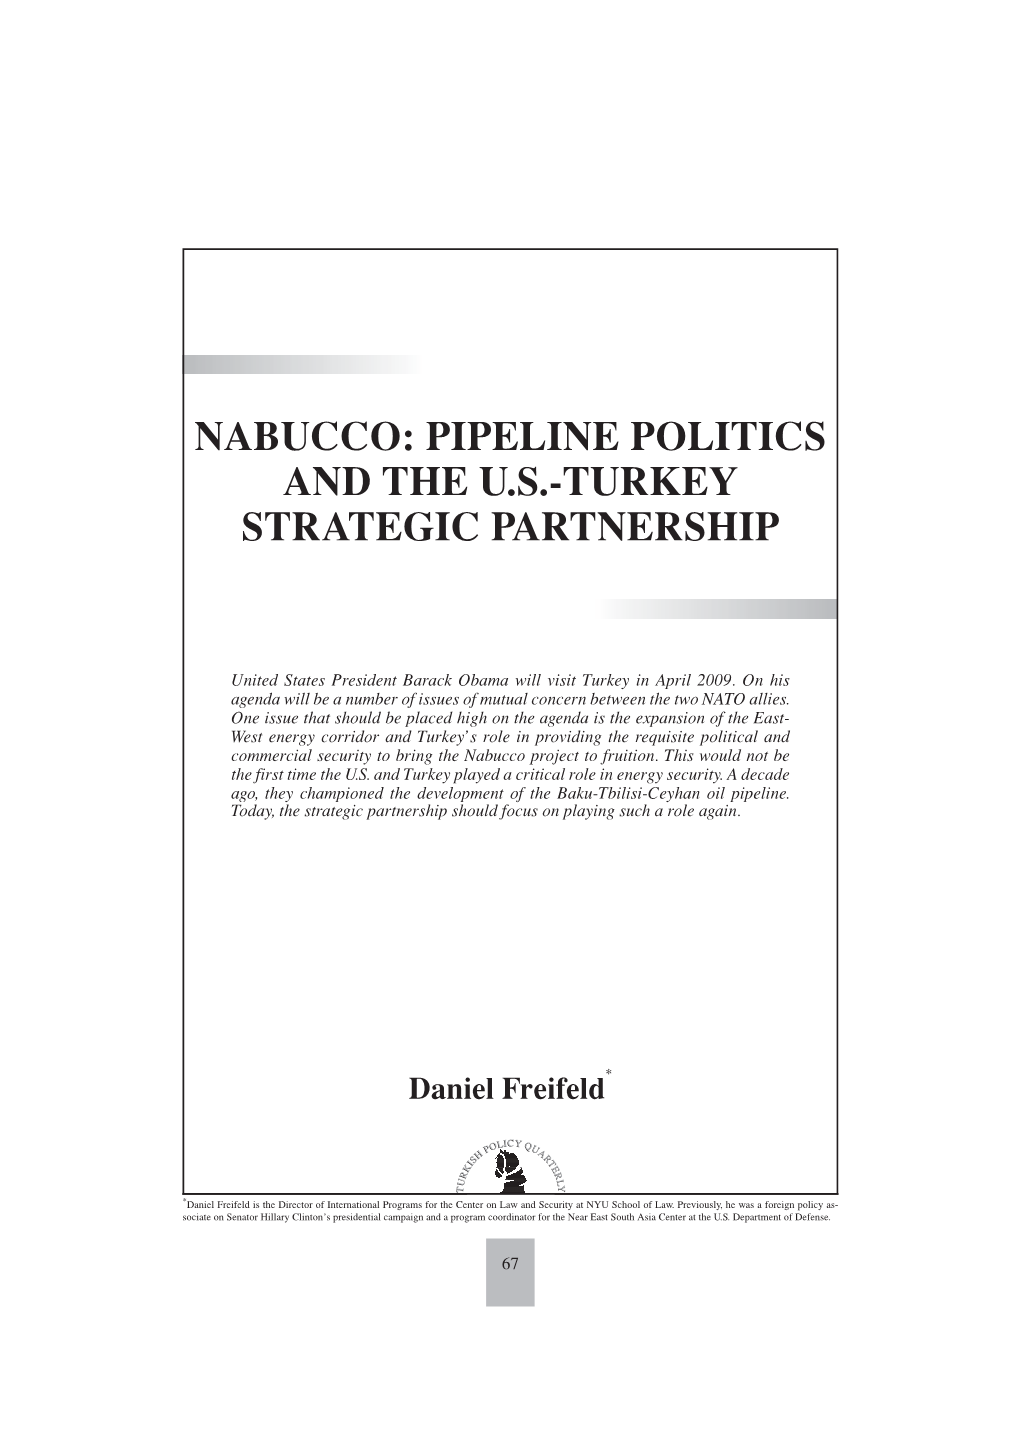 Nabucco: Pipeline Politics and the U.S.-Turkey Strategic Partnership